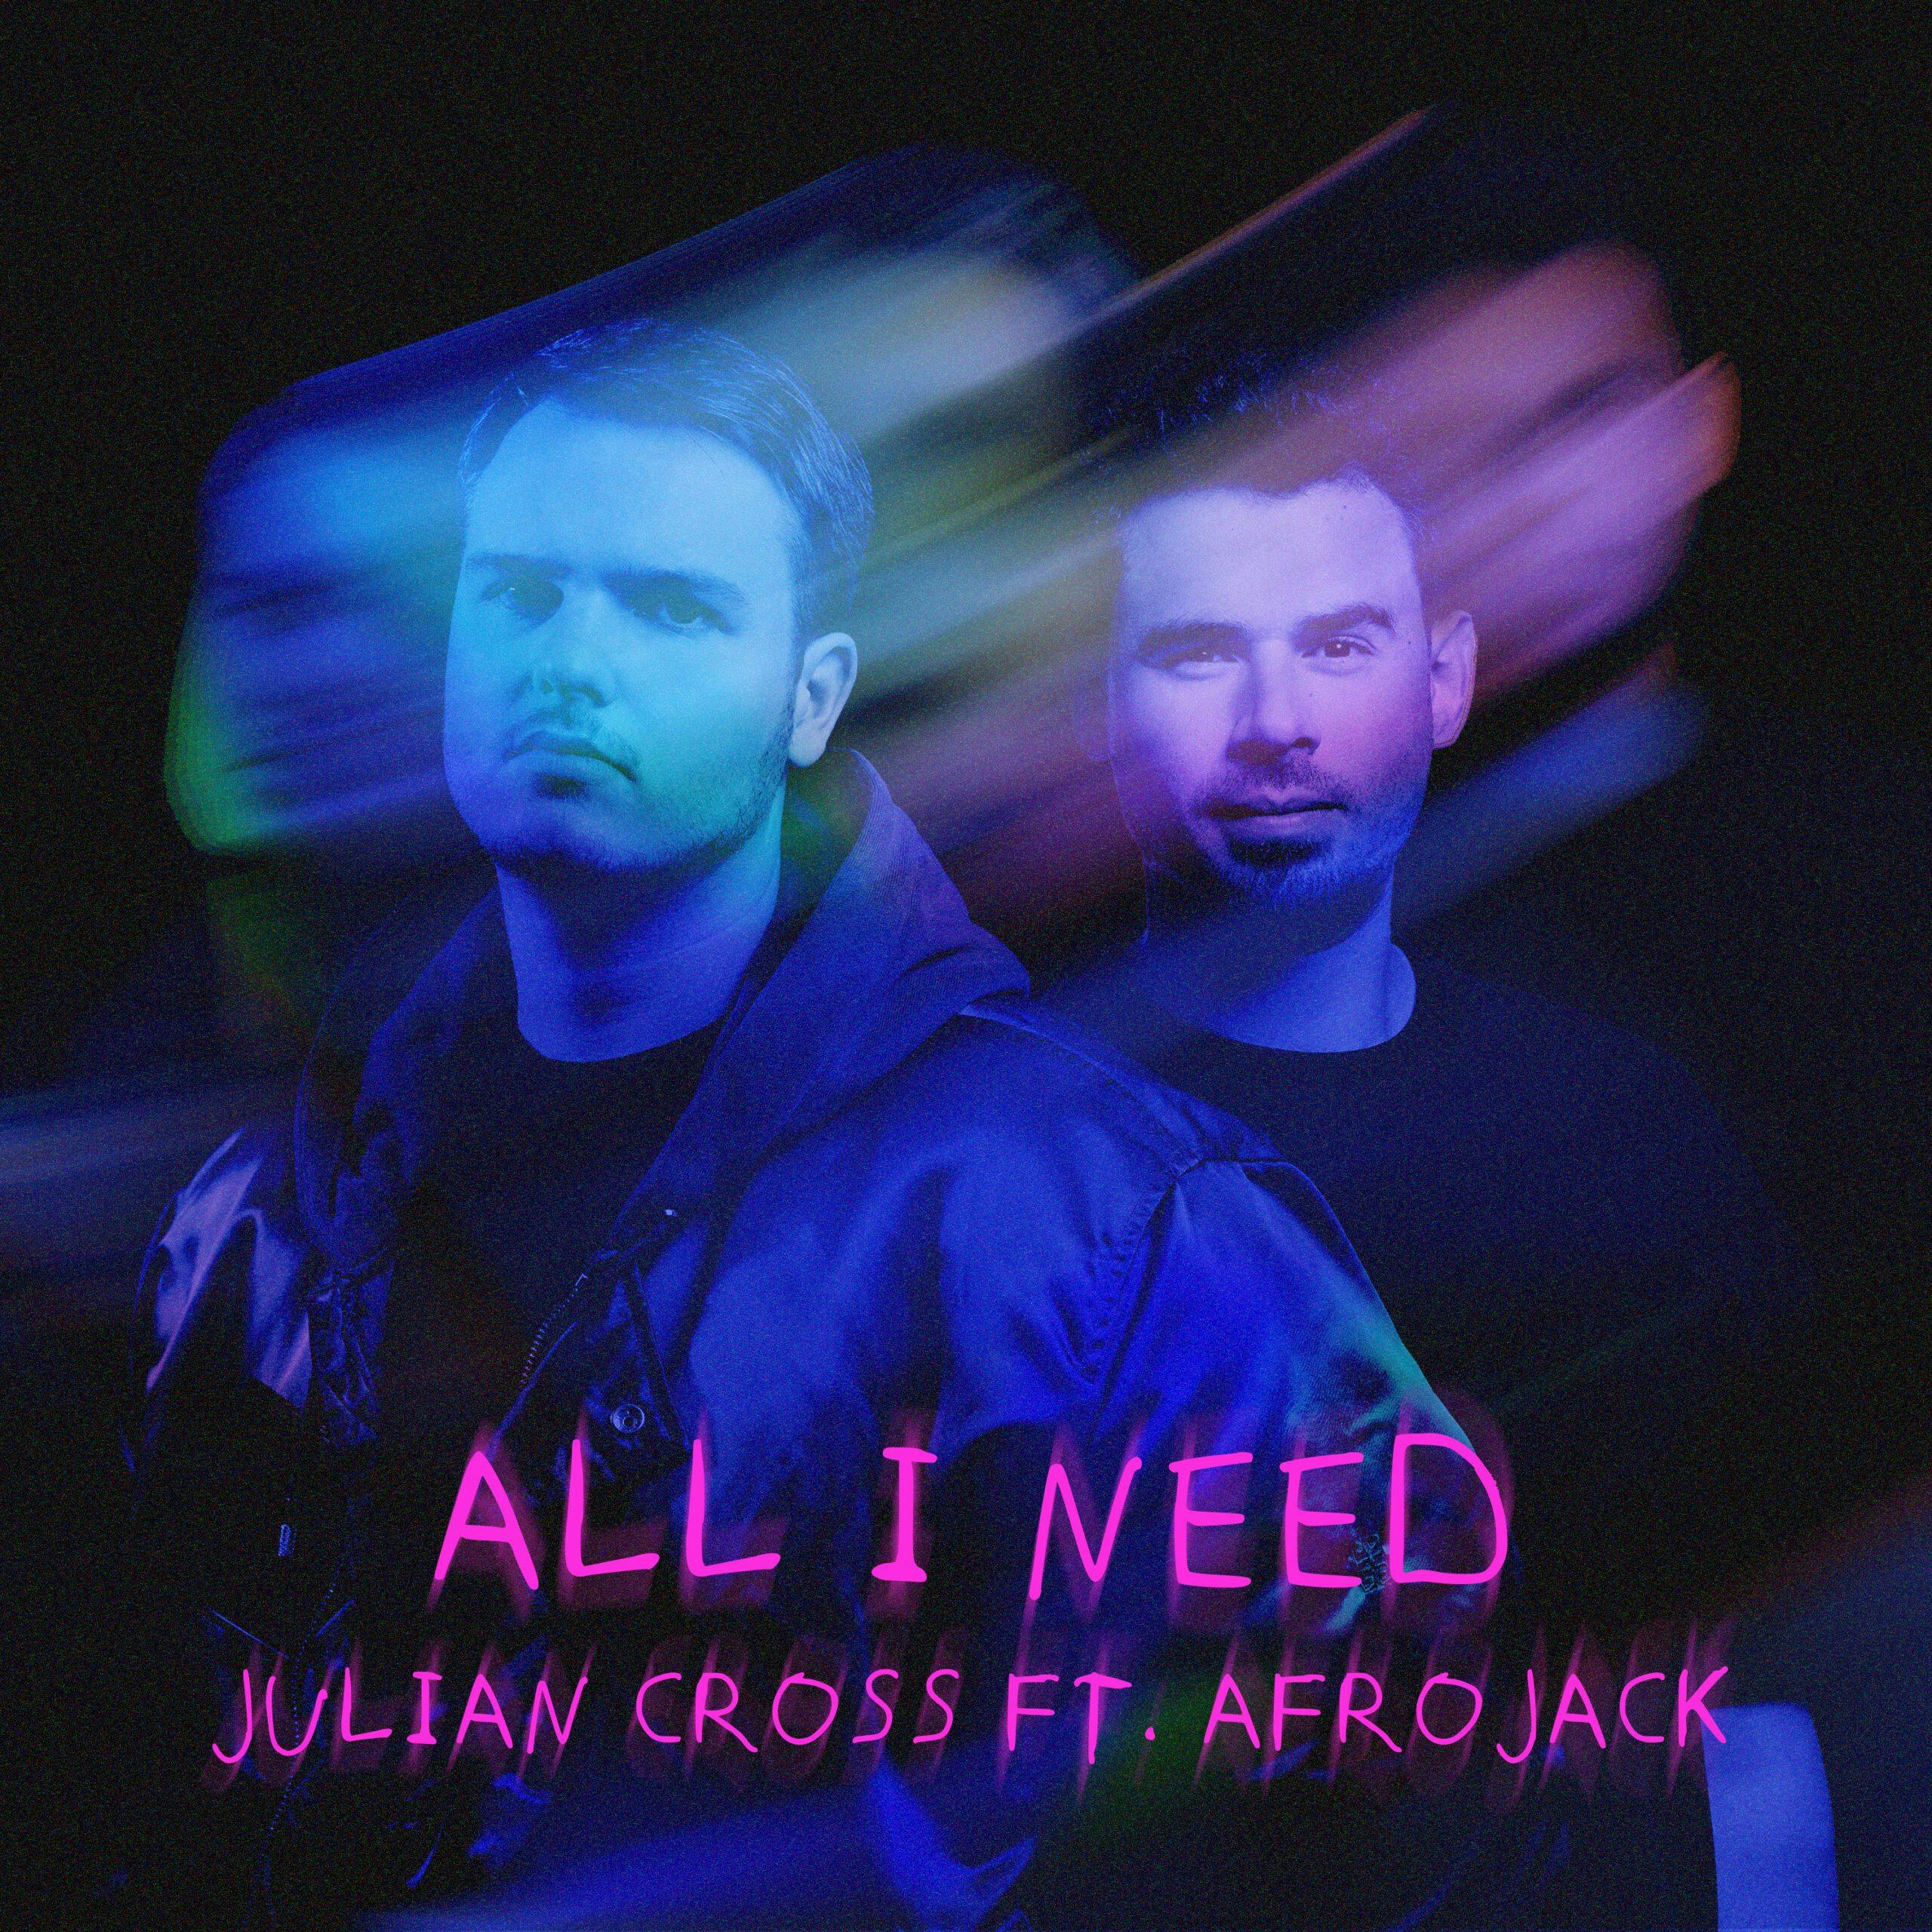 All I Need by Julian Cross ft. Afrojack